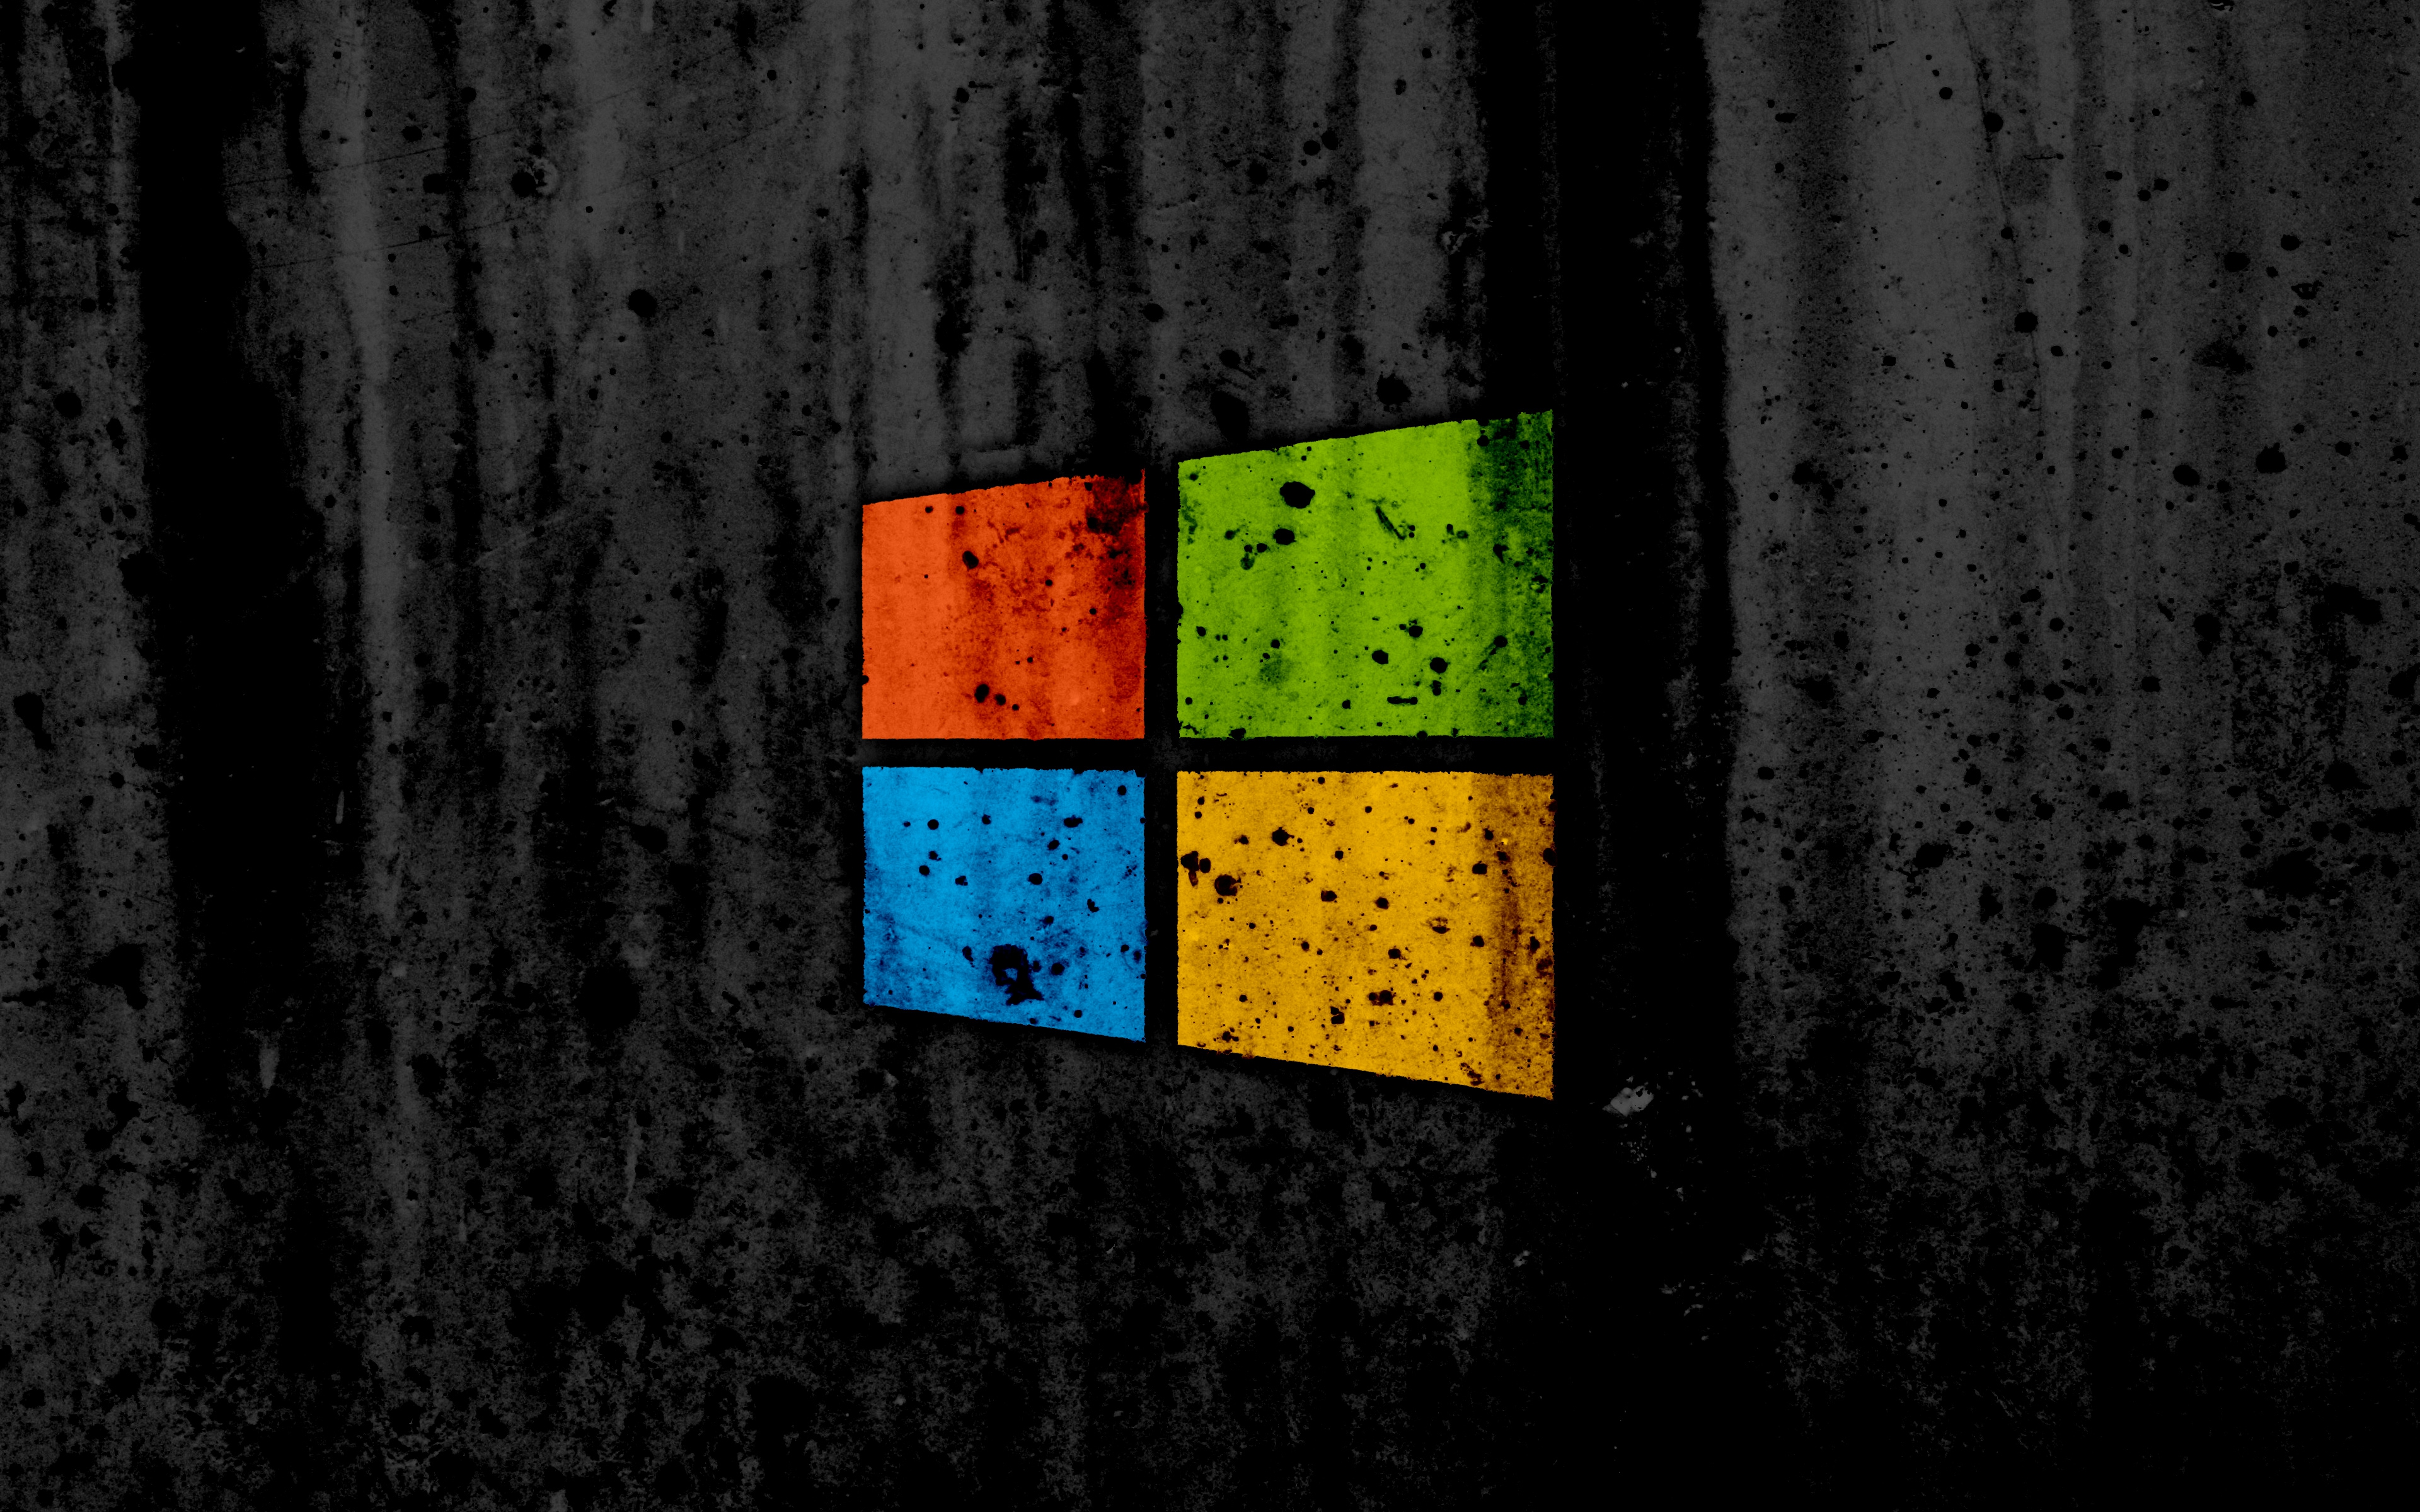 grunge-windows-8-black-backgroud-creative-logo-3840x2400.jpg